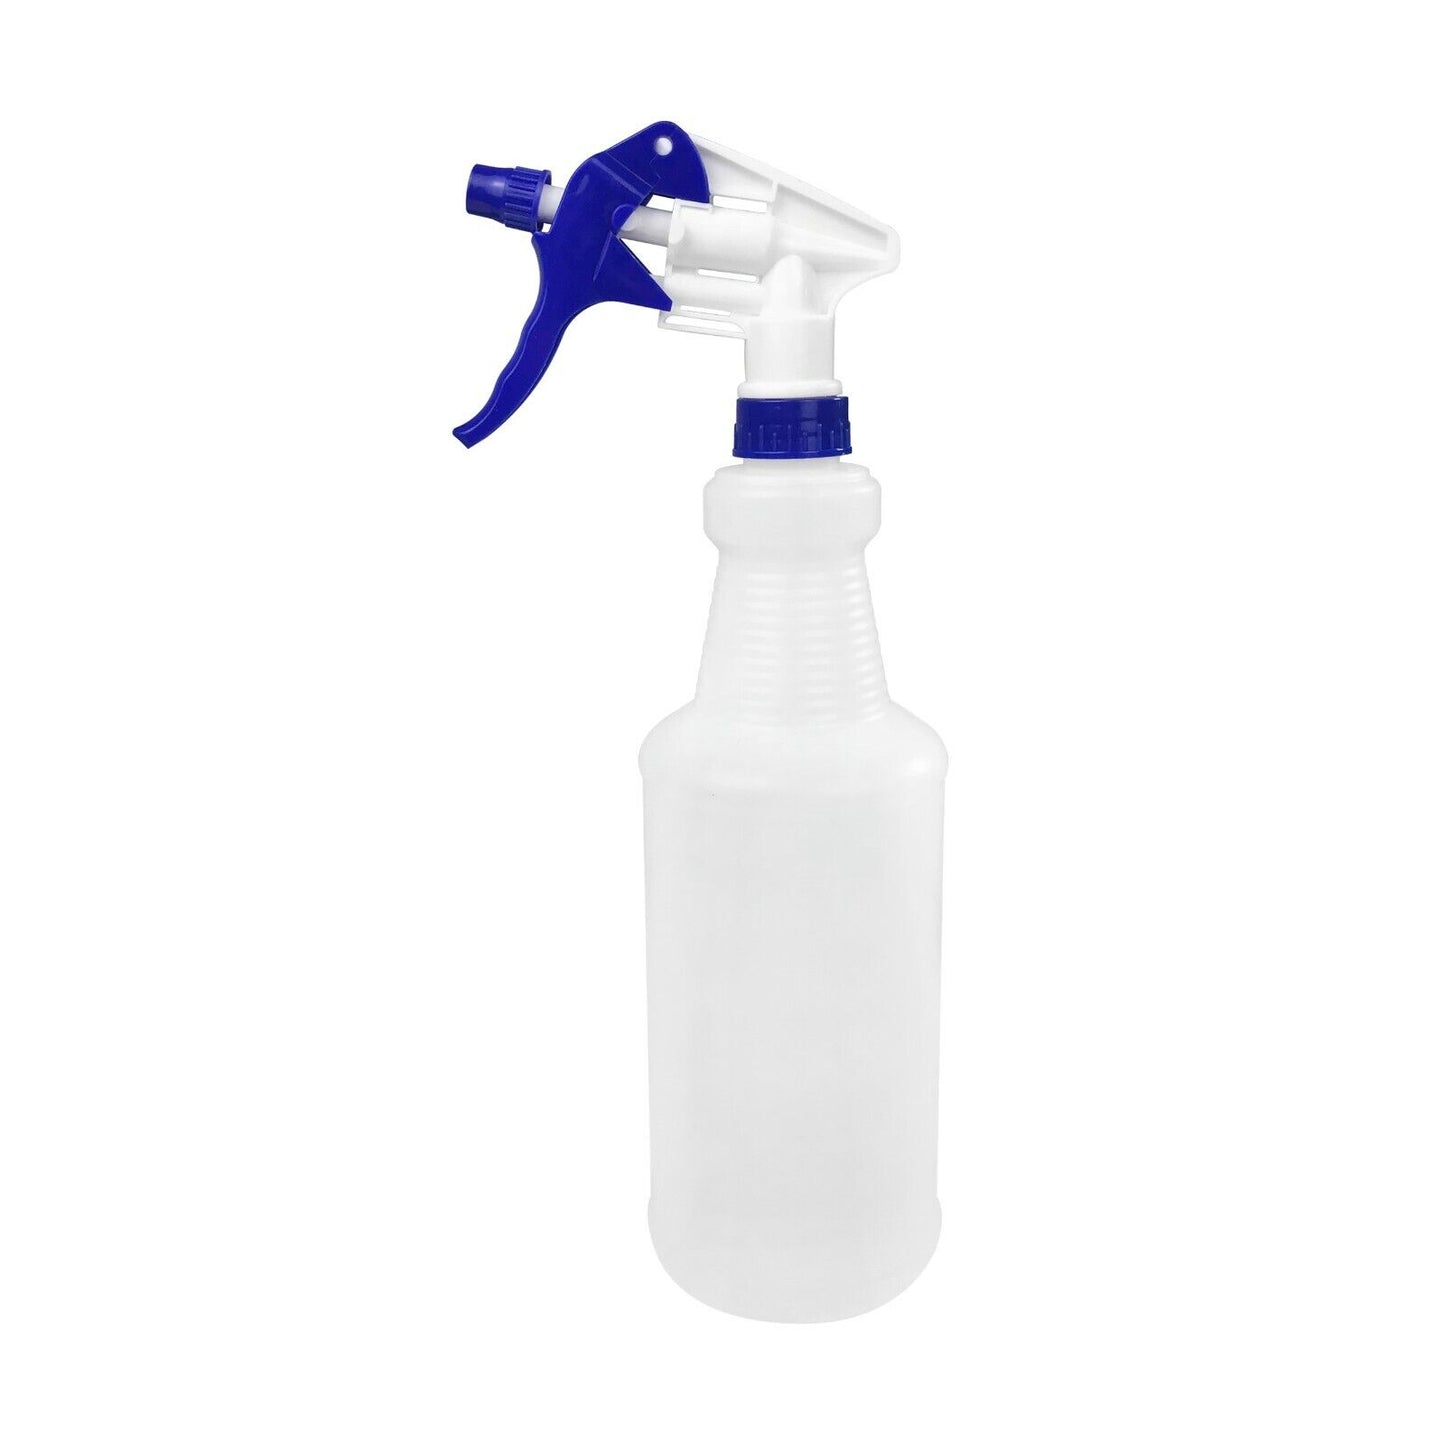 【36】Pk Spray Trigger w/32oz comm. Spray Bottles, 1ml stroke, sealed, 7974A-TB